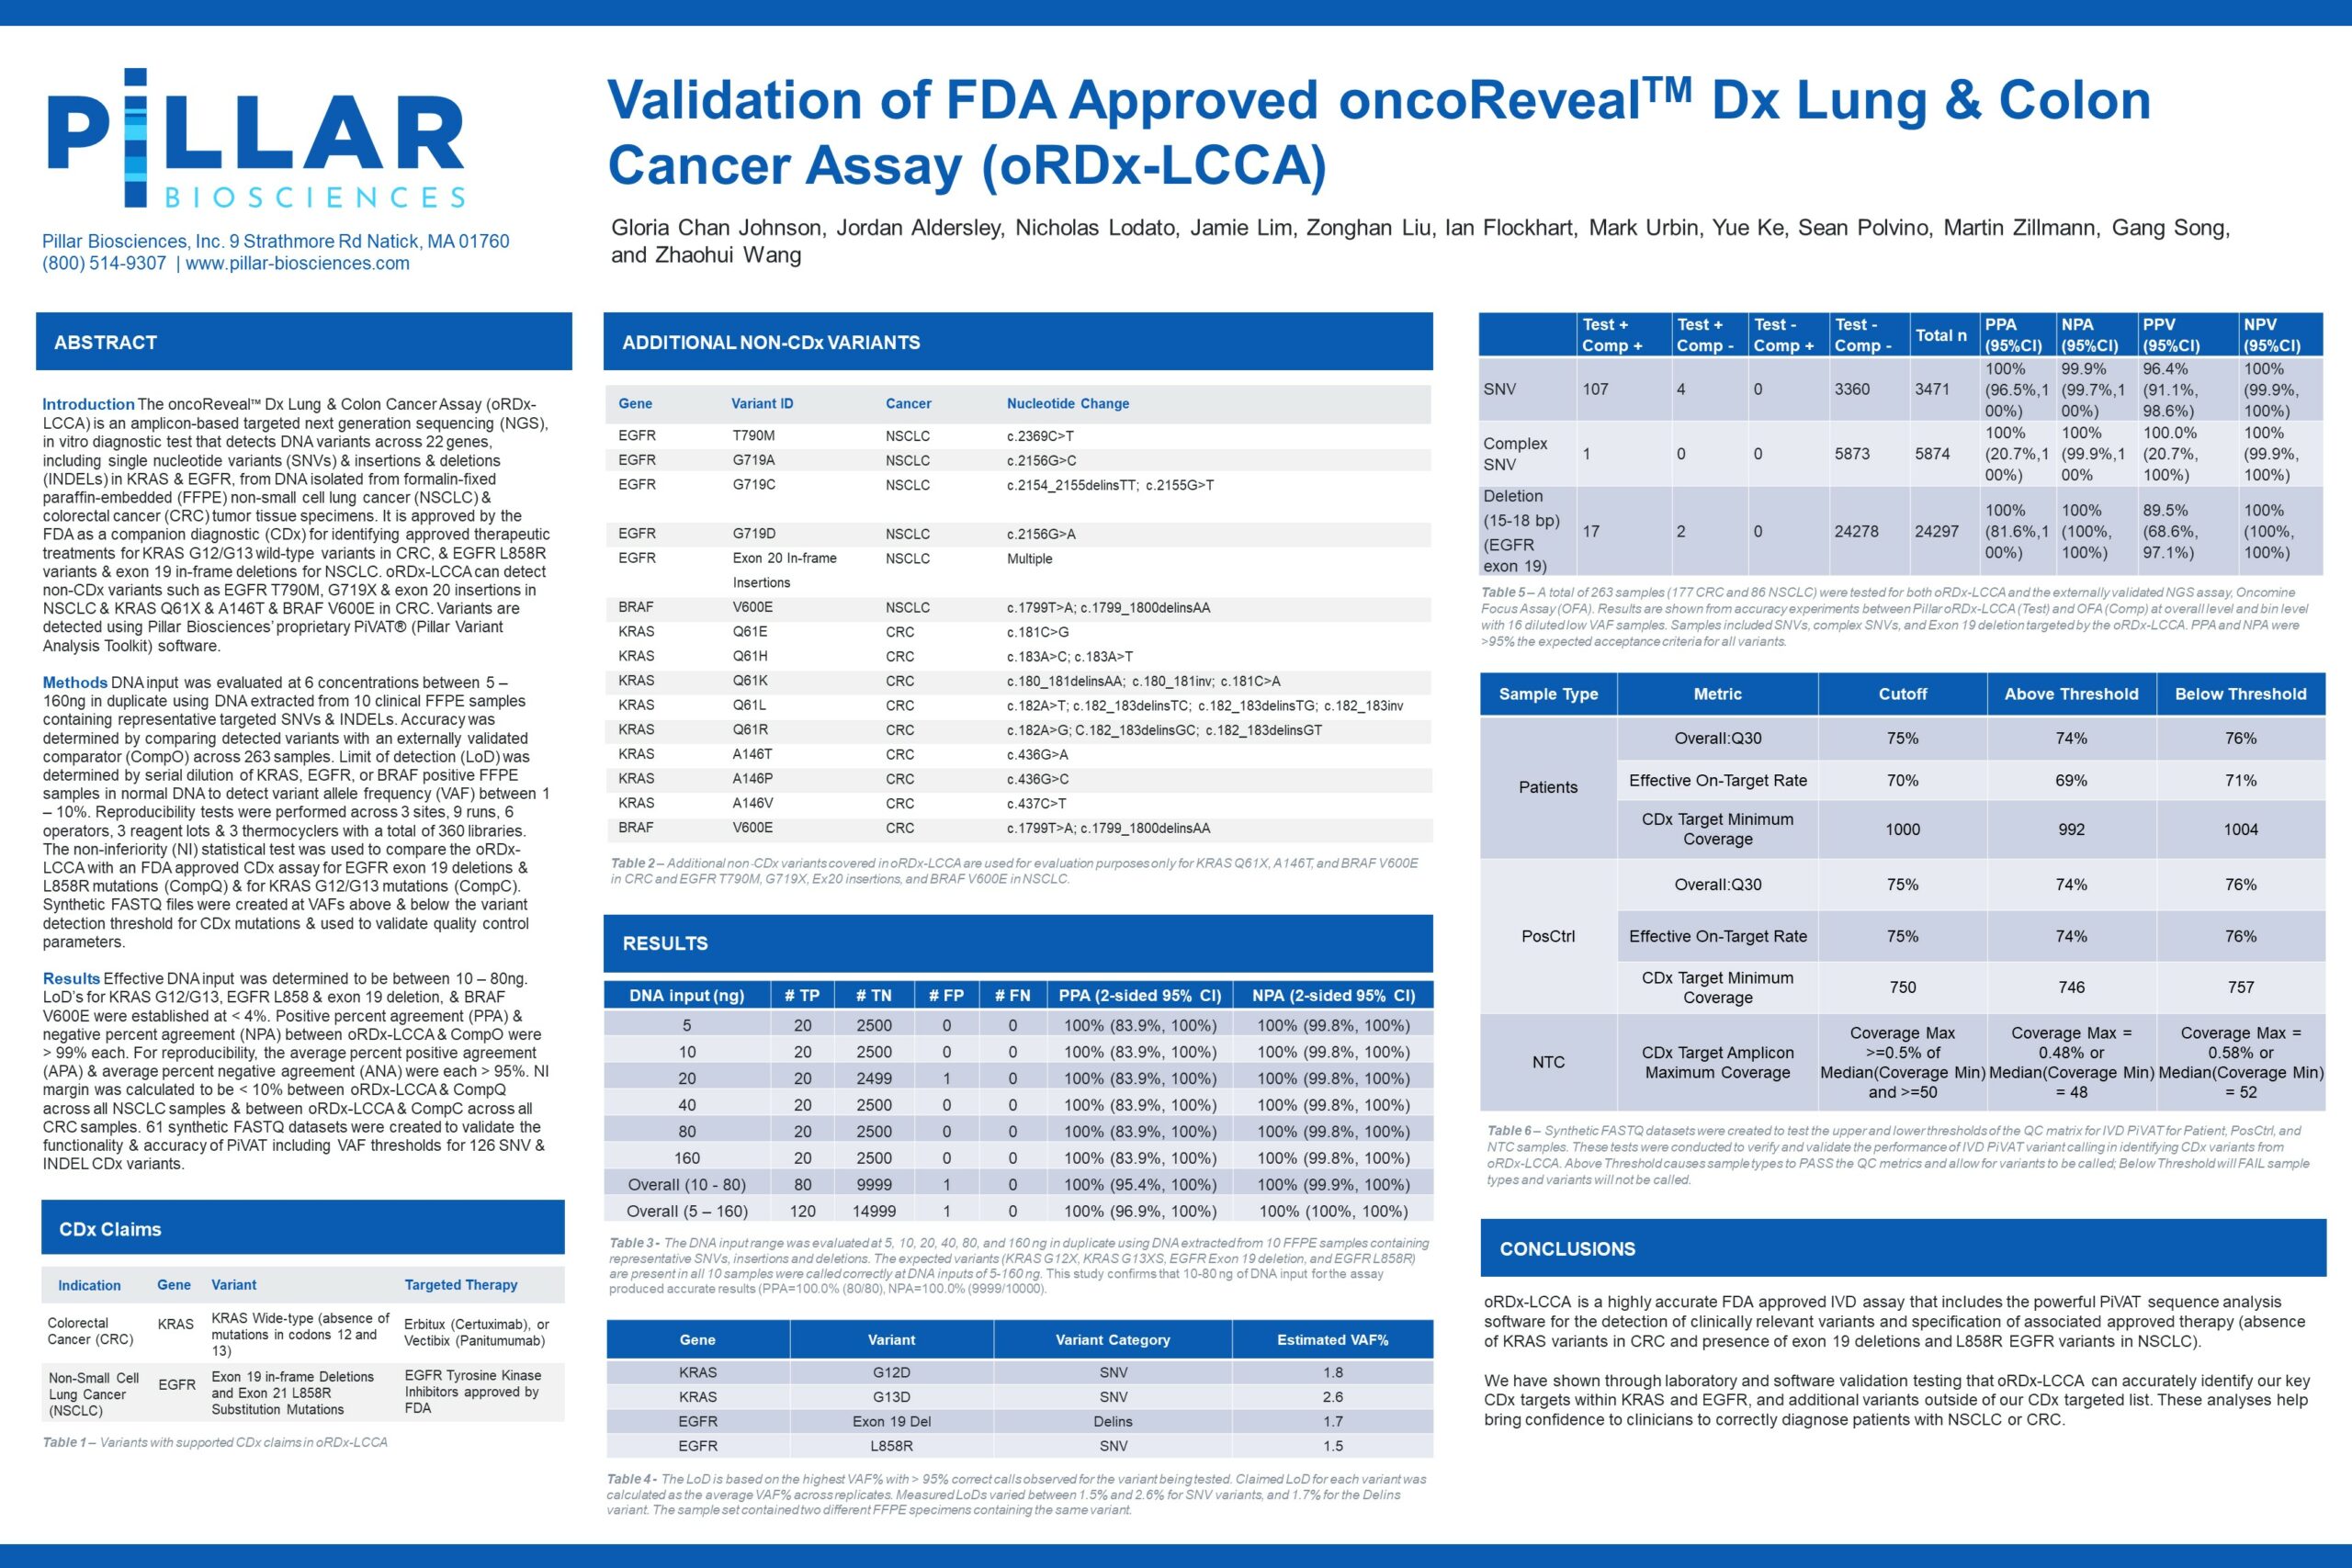 AACR 2022 - Johnson et. al. - Validation of FDA